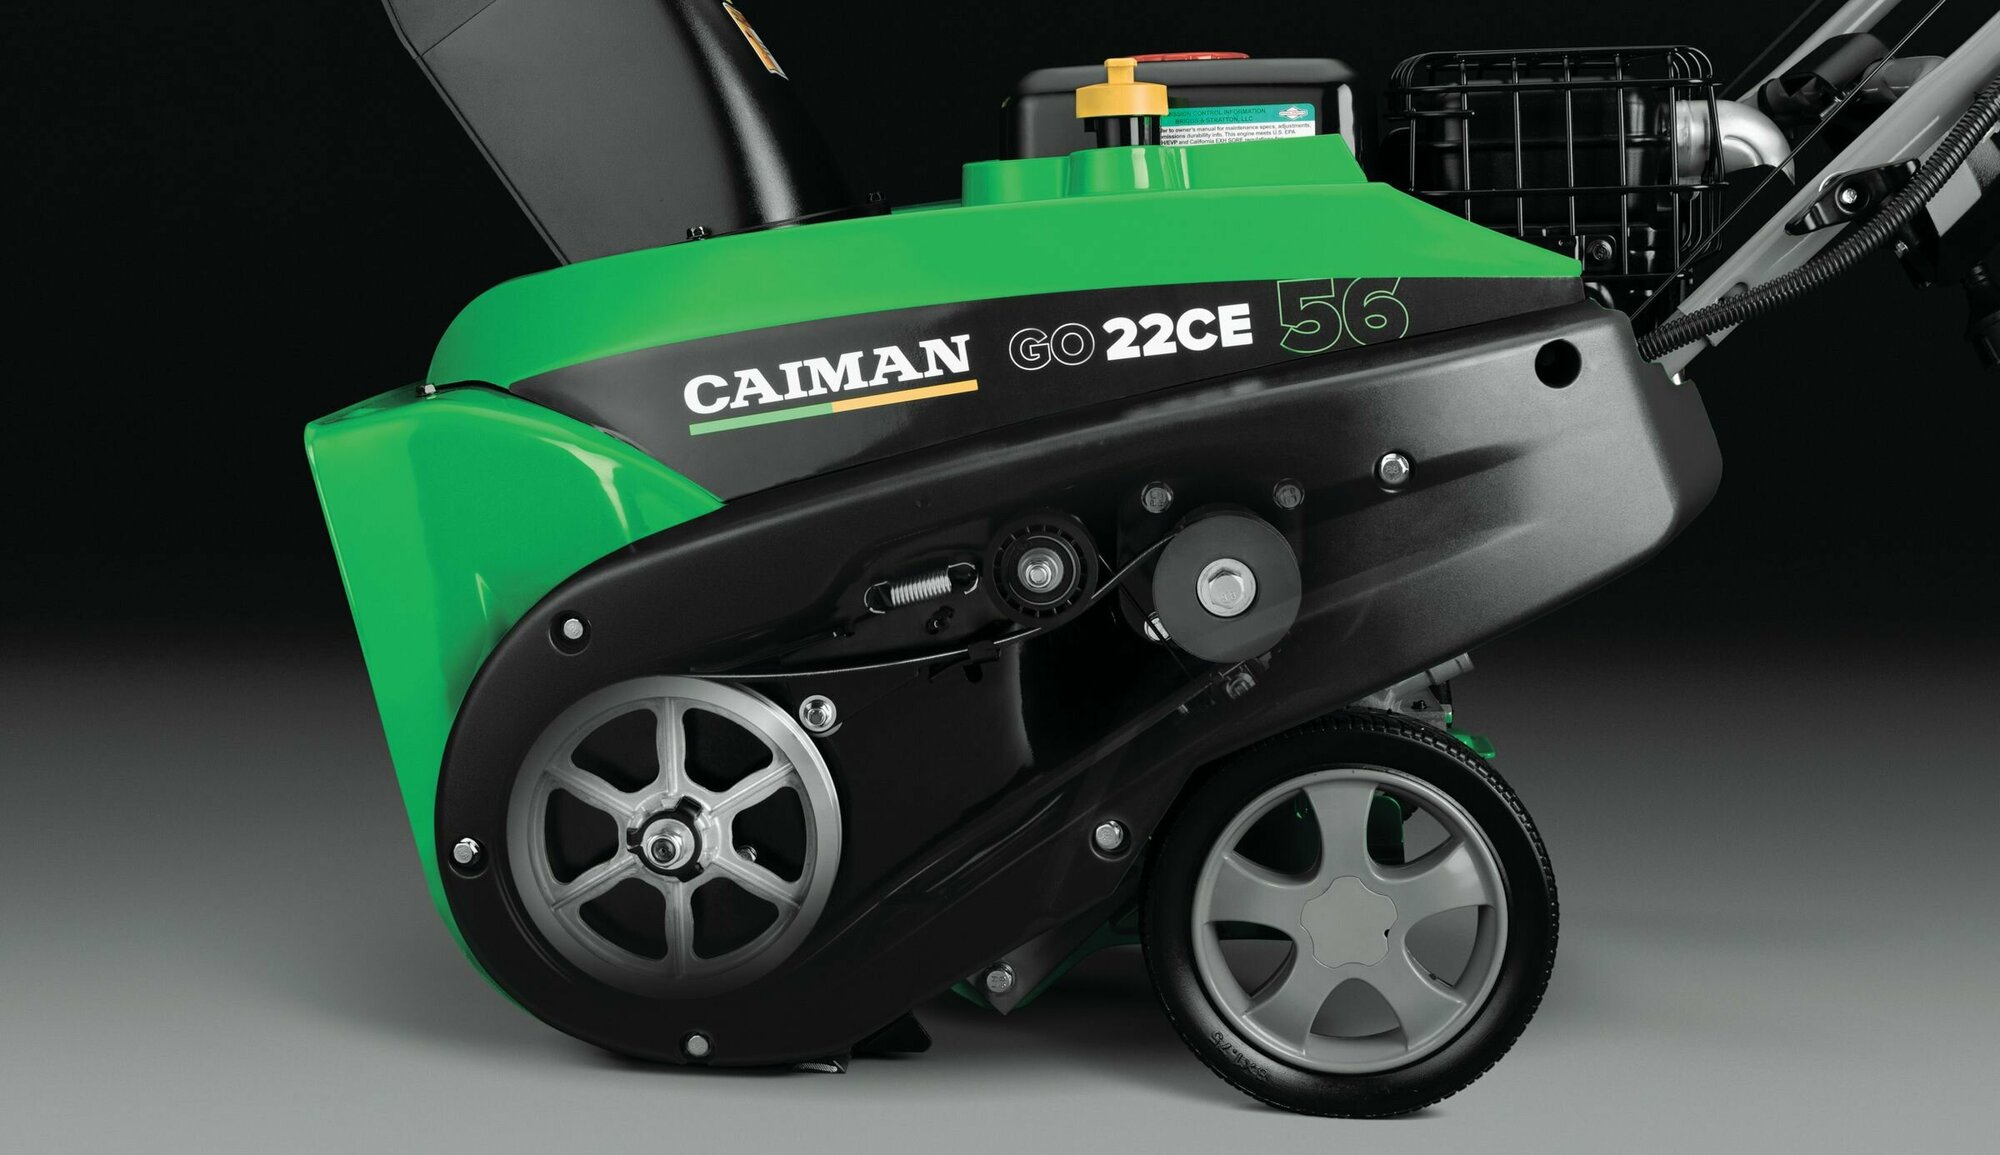 Снегоуборщик CAIMAN Go 22CE, двиг. CAIMAN Green Engine (208 cc Snow), электростартер, ширина захвата 56 см, 42 кг кг